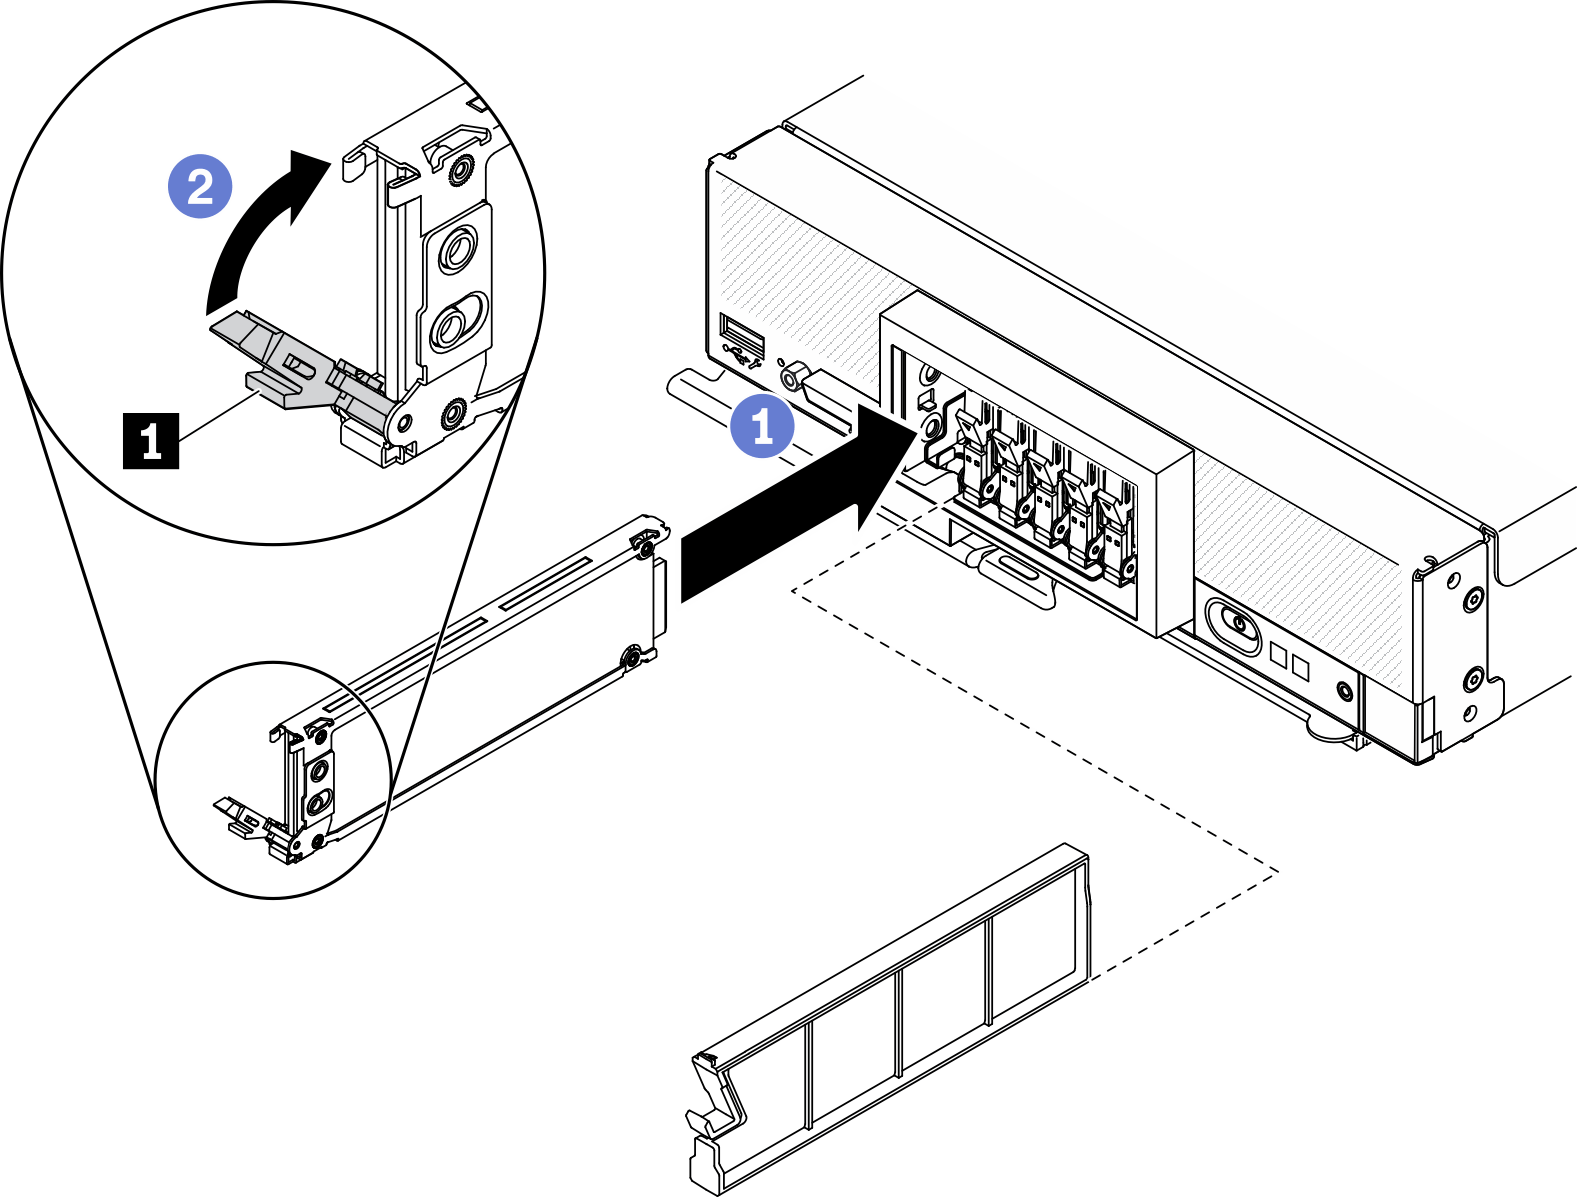 EDSFF hot-swap drive installation